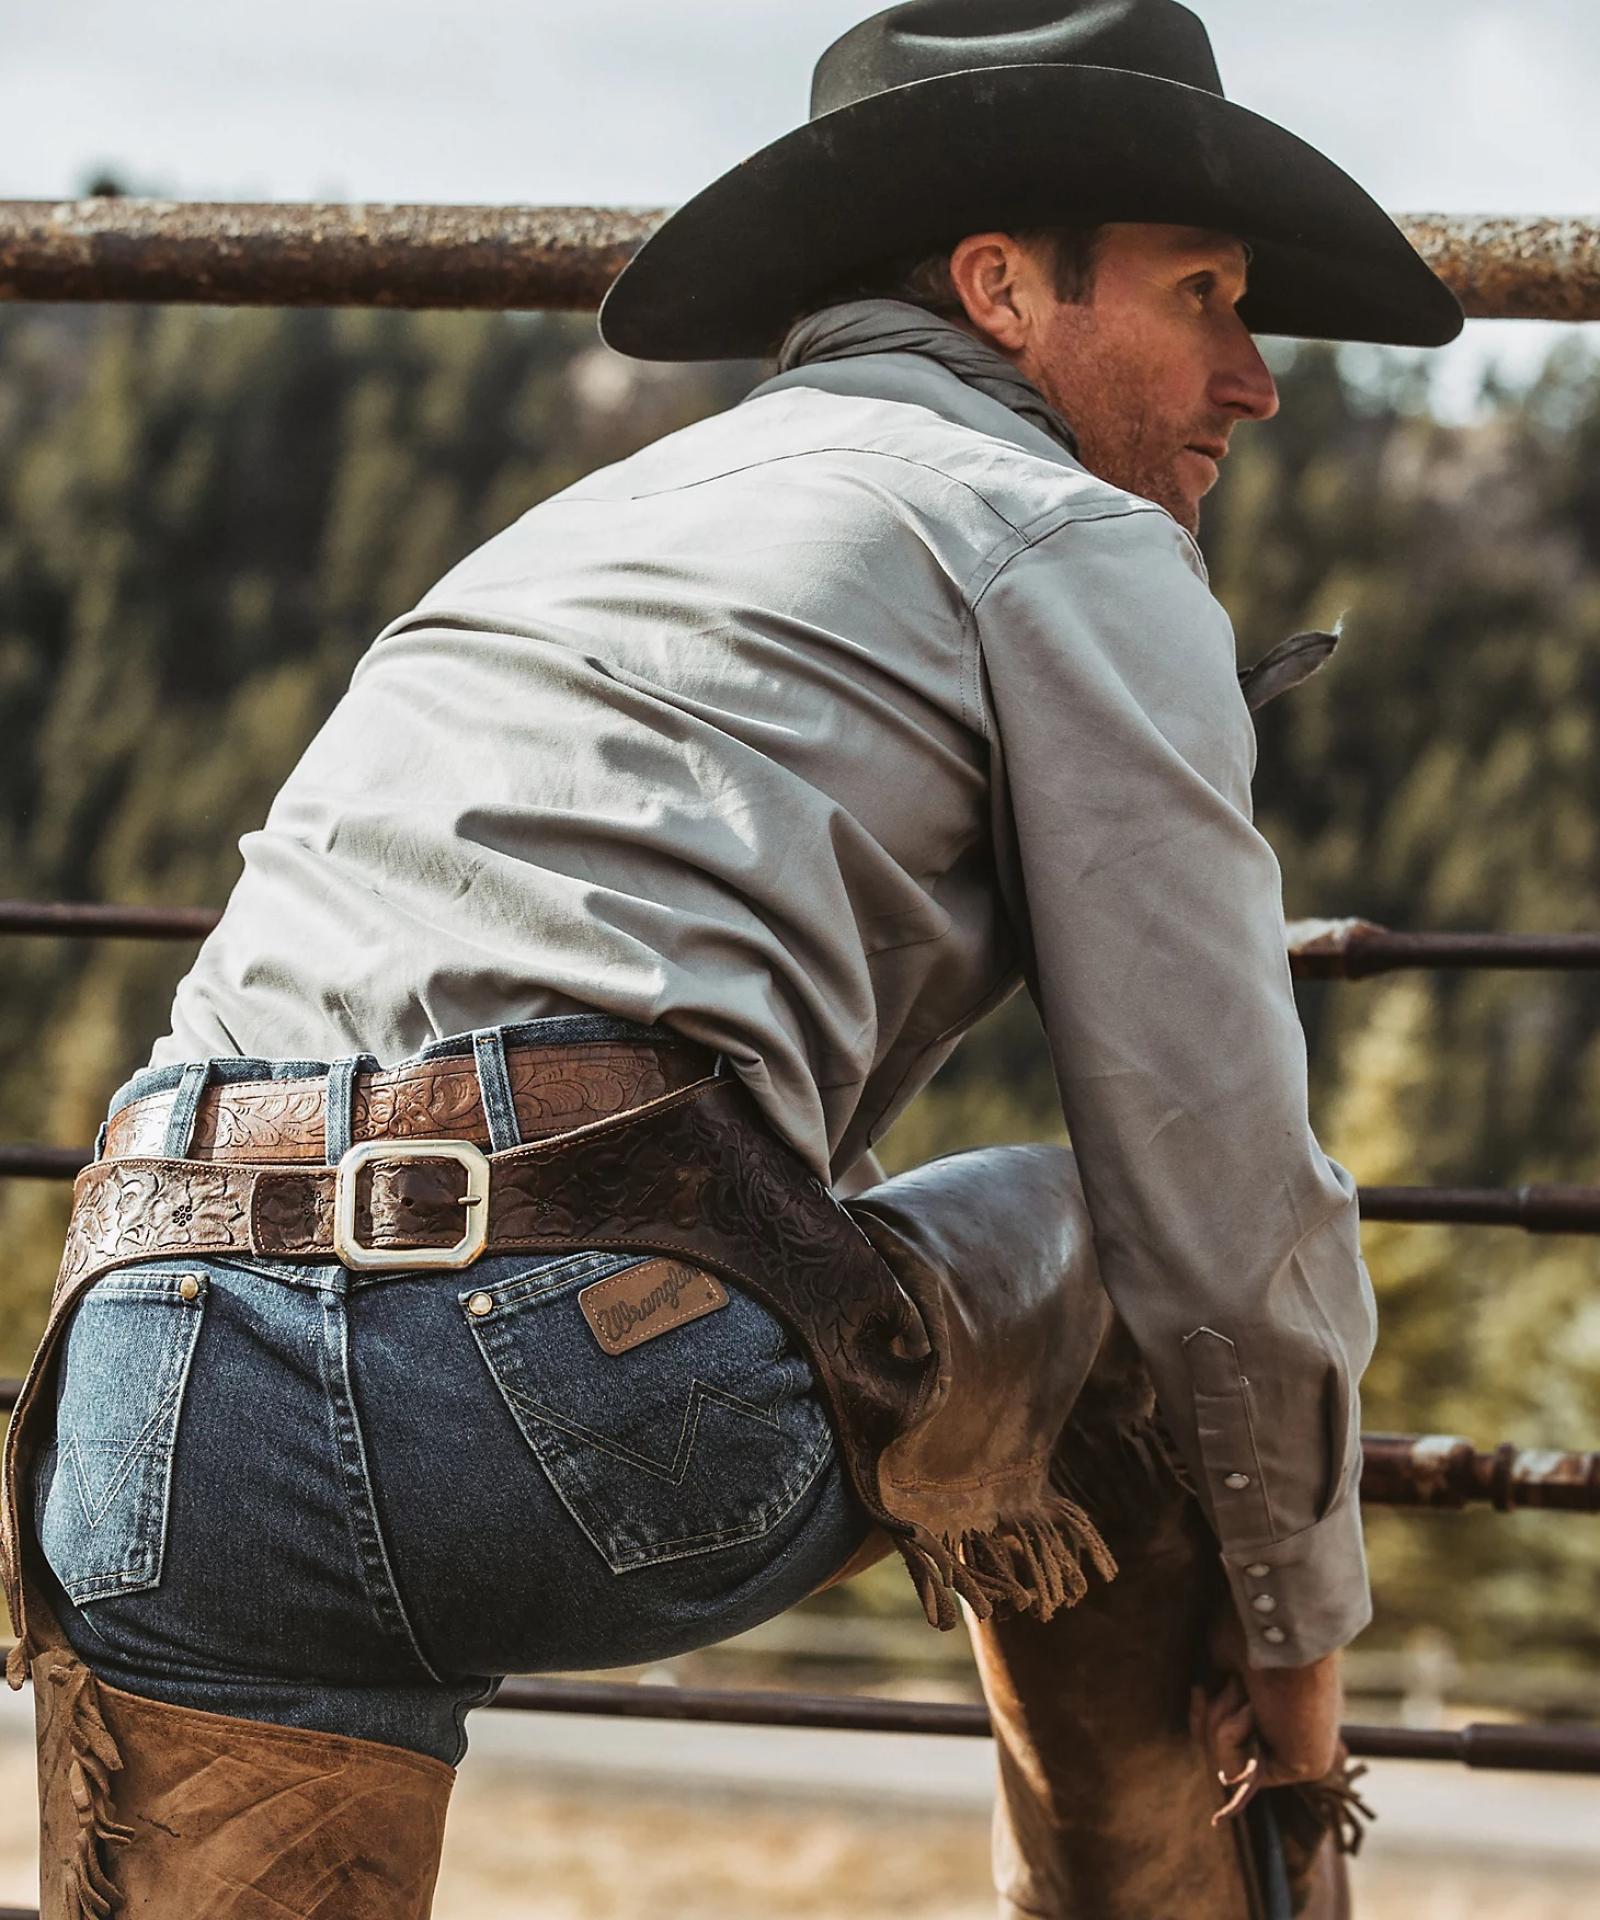 Wrangler Advanced Comfort Cowboy Cut Long Sleeve Shirt